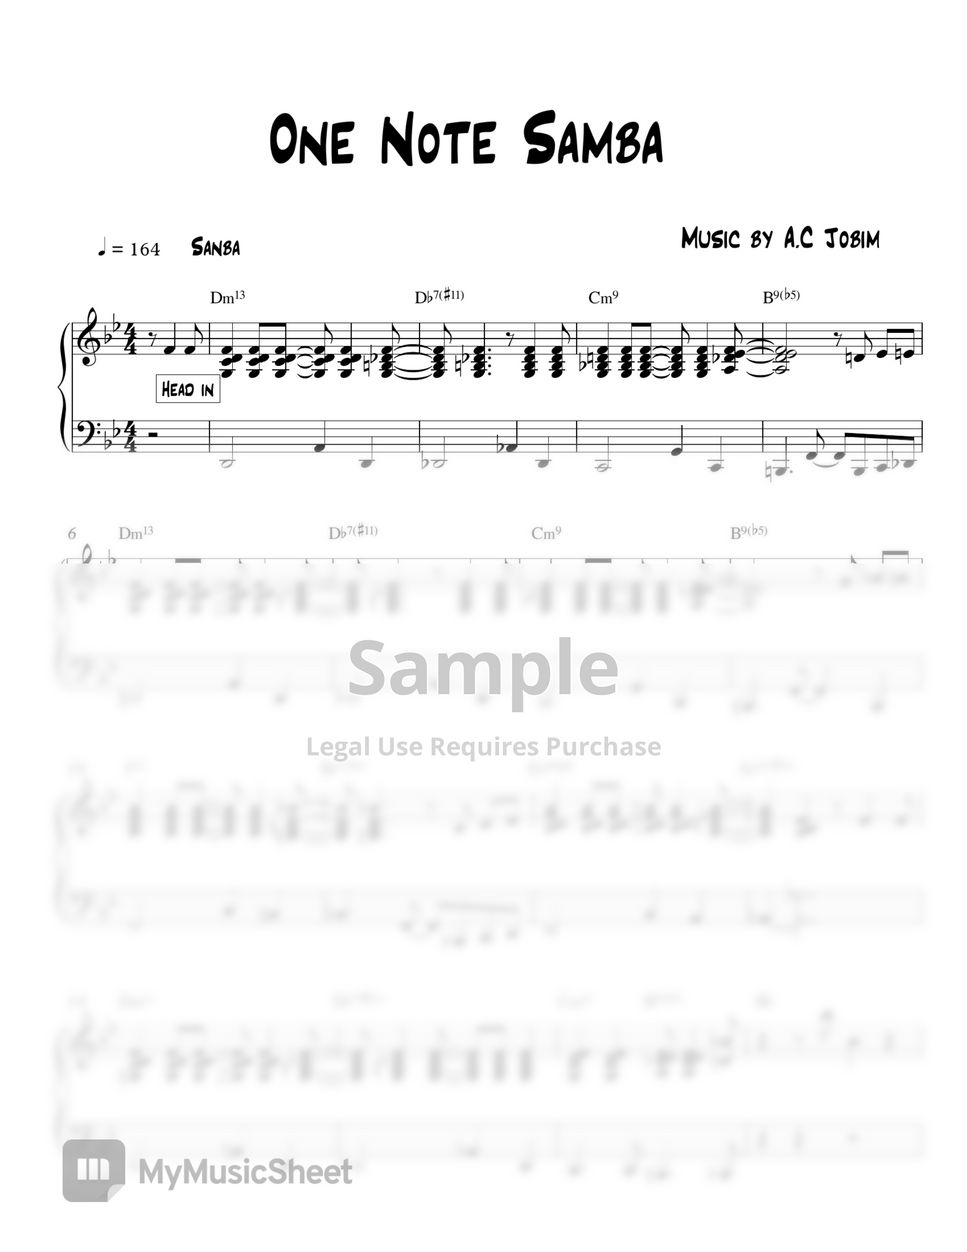 A. C Jobim - One Note Samba (Jazz) by MIWHA